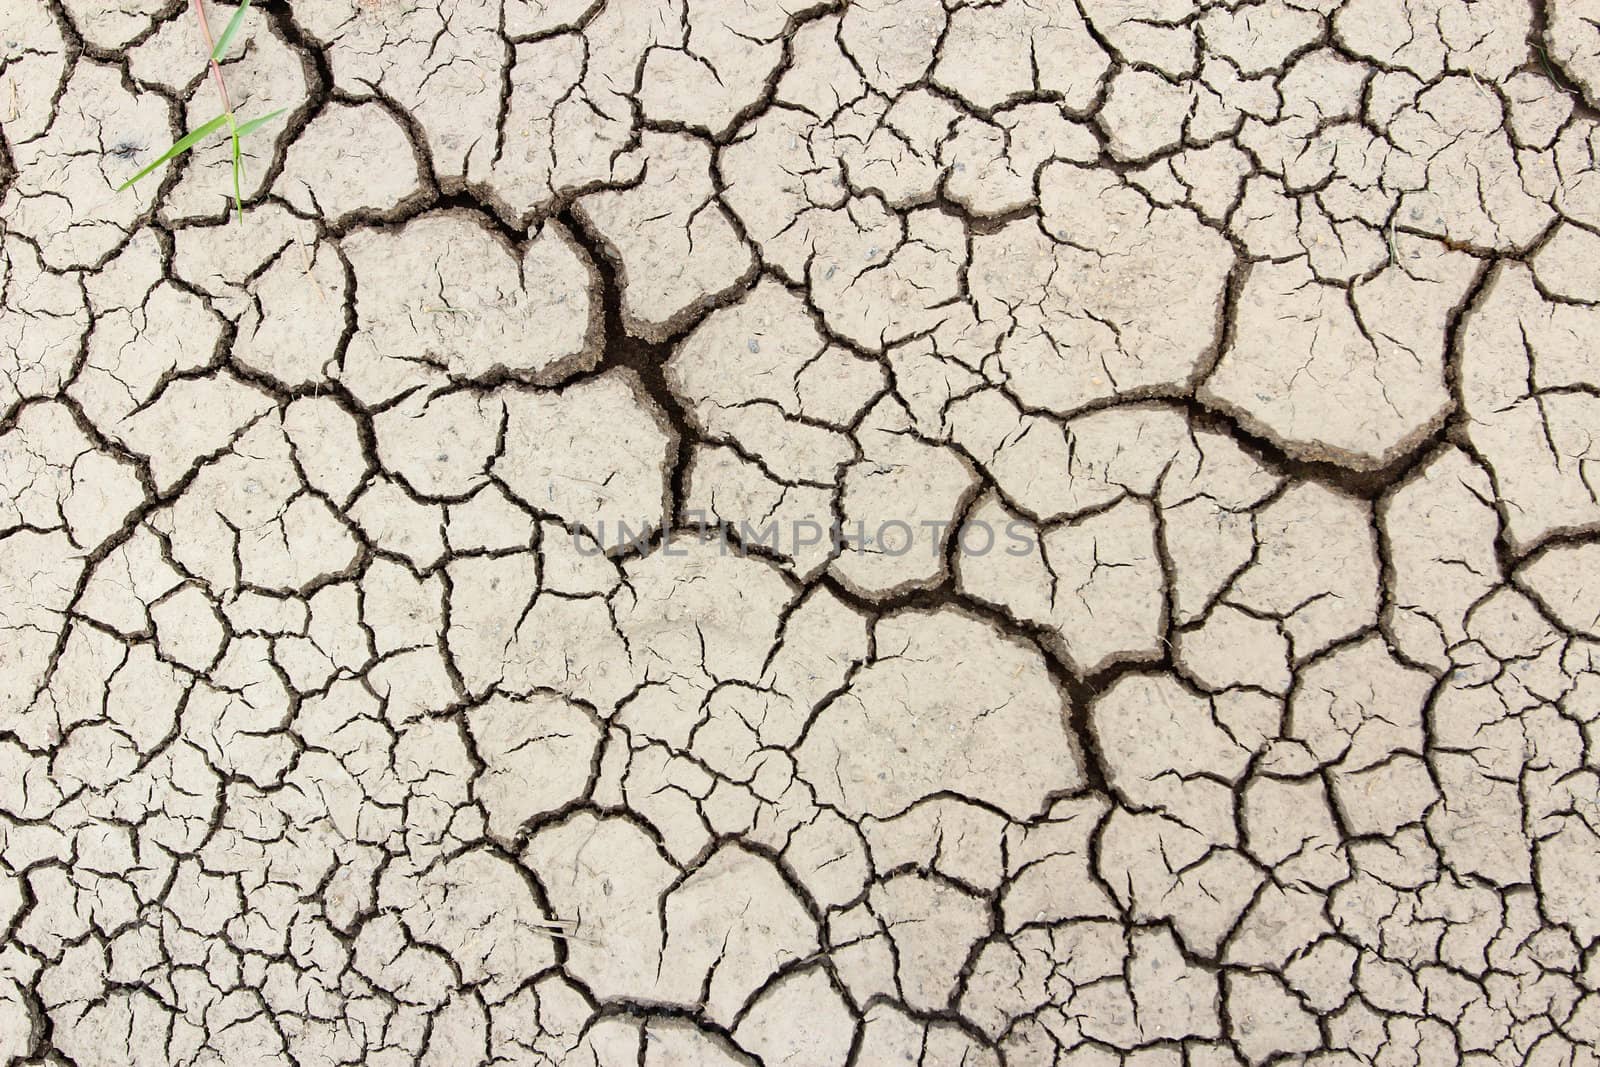 Crack soil on dry season, Global worming effect. by bajita111122